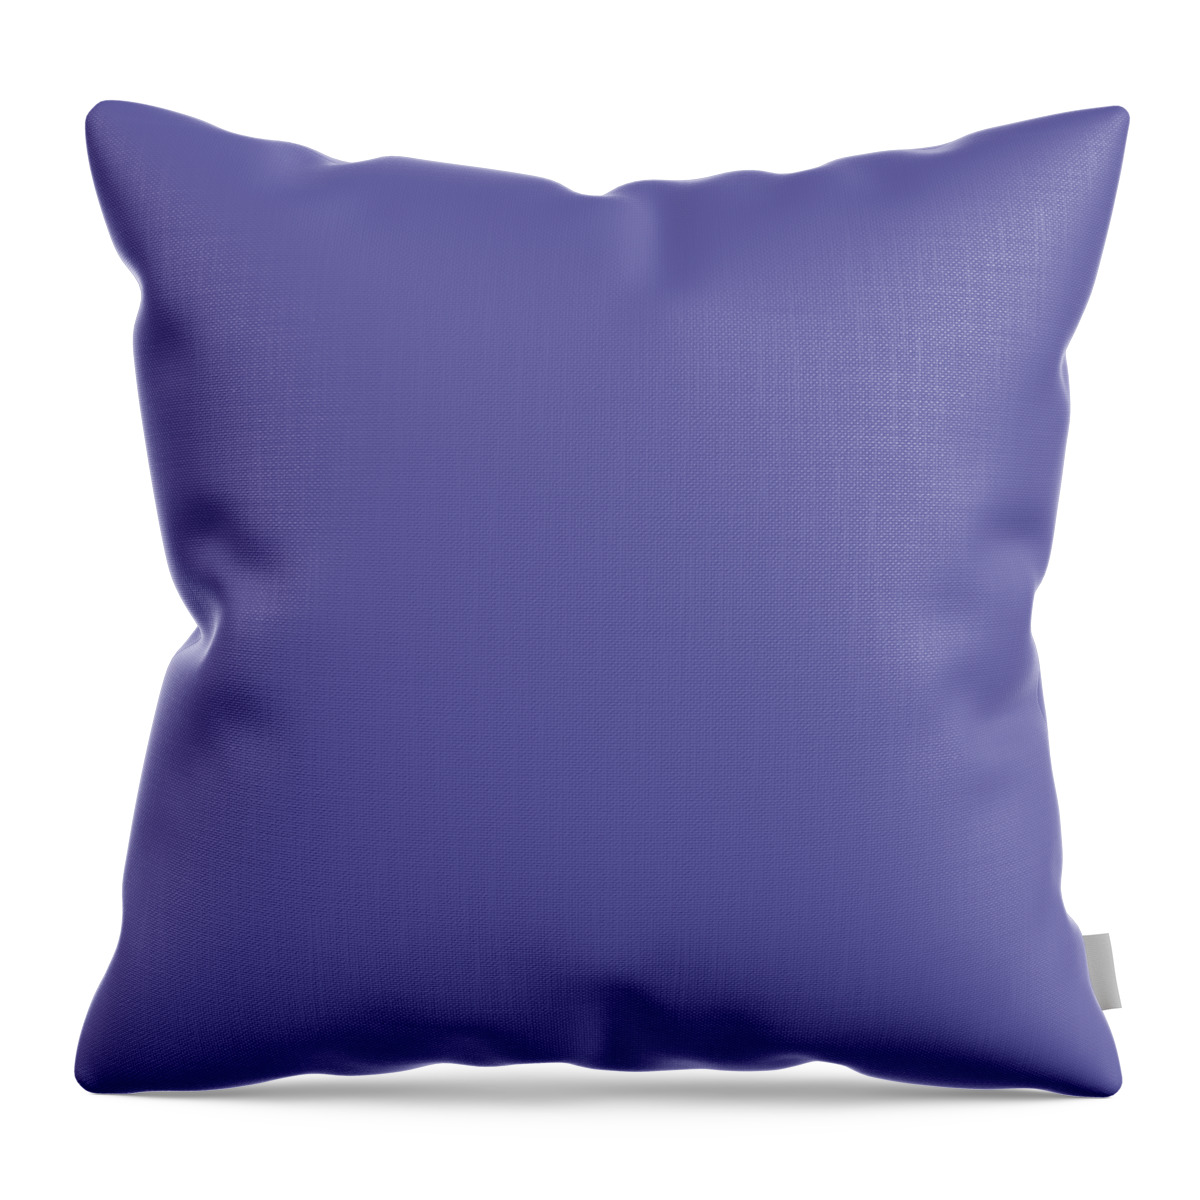 2022 Throw Pillow featuring the digital art 2022 Veri Peri Blue Gray Purple by Delynn Addams